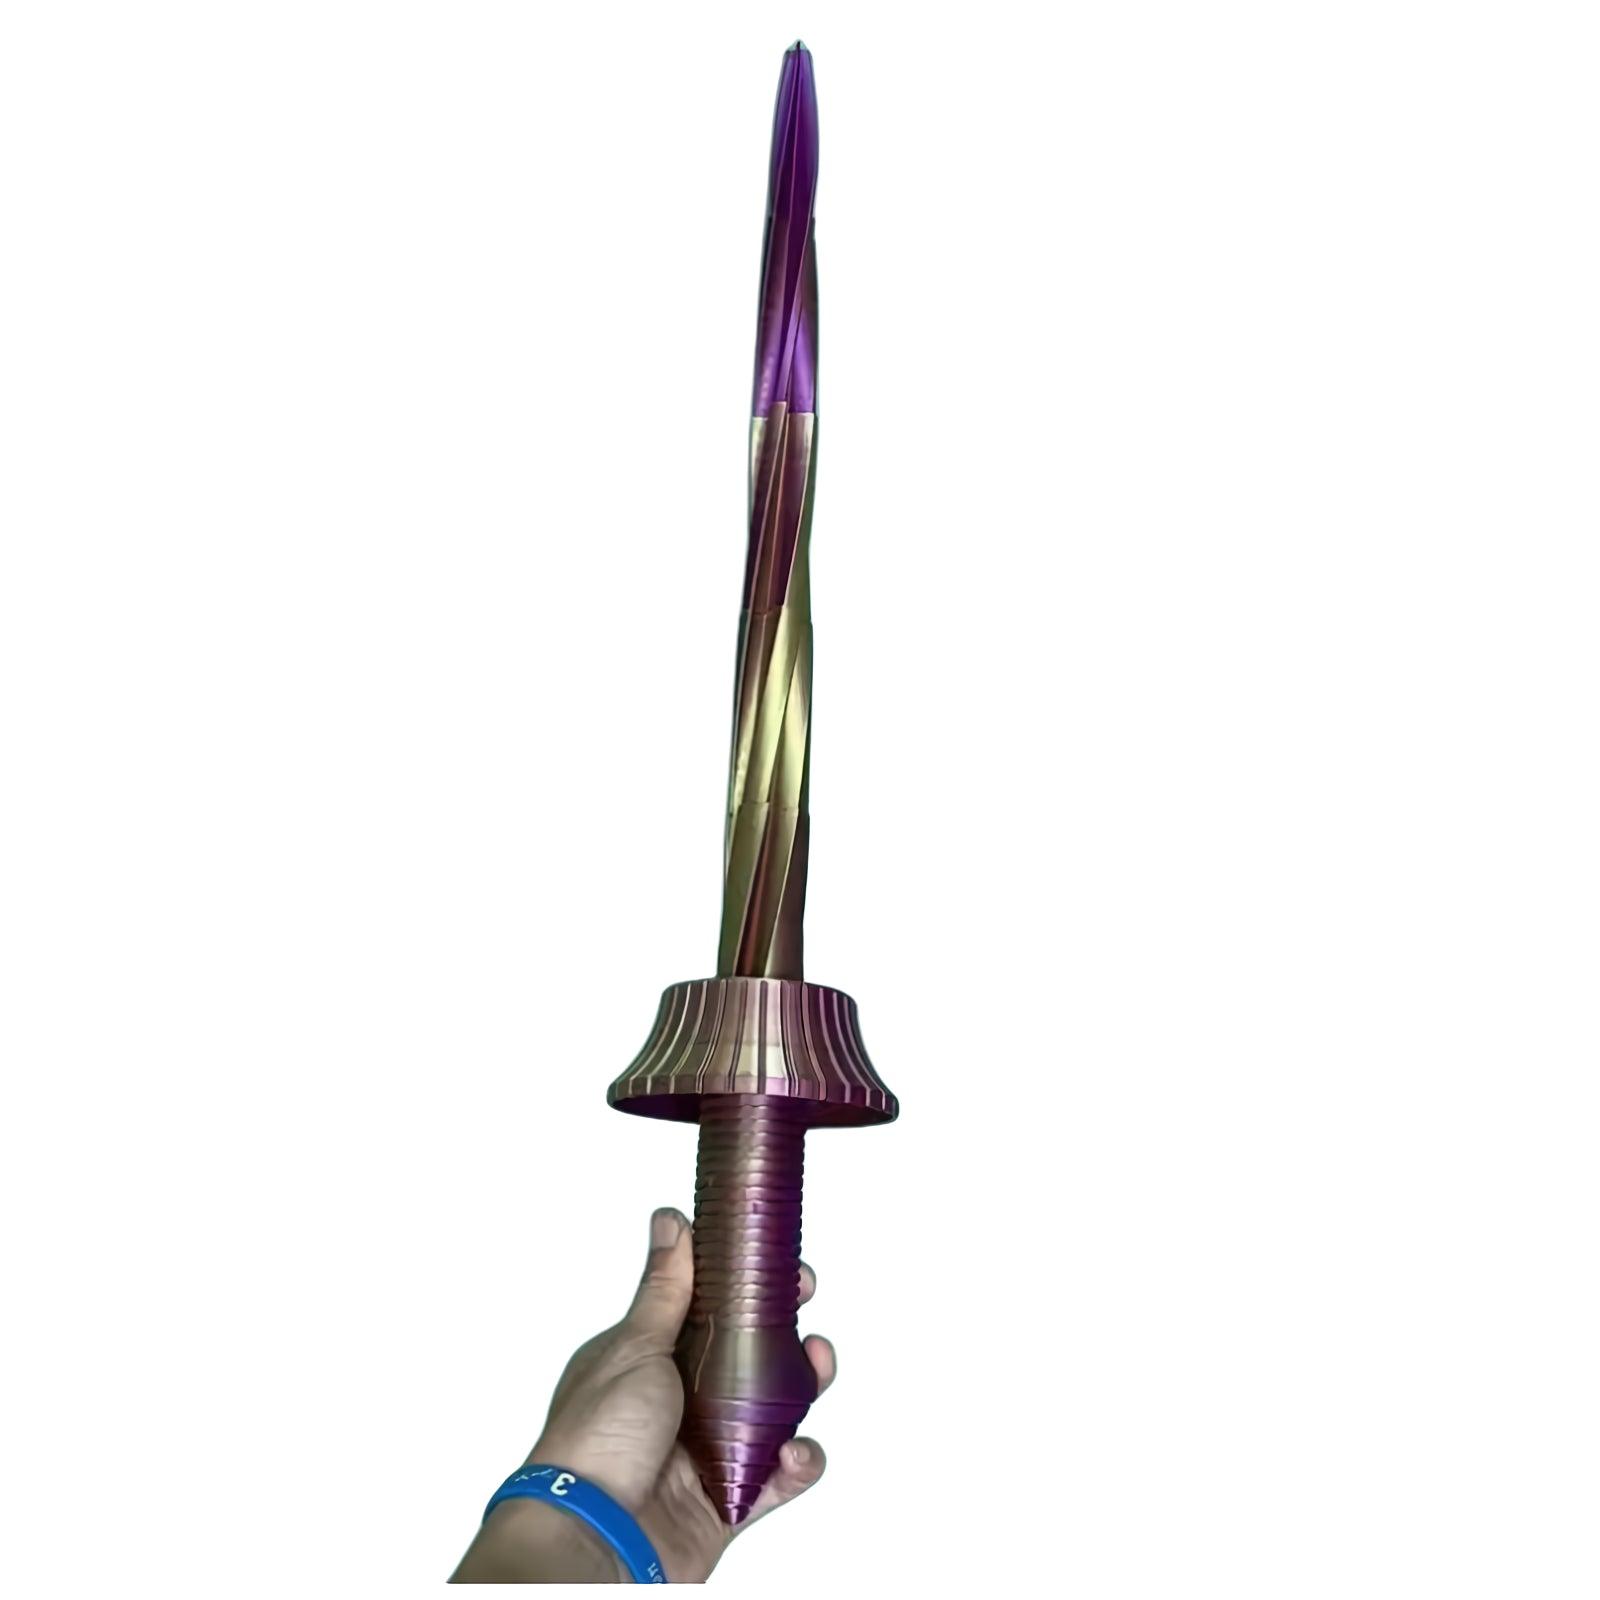 3D Printed Stylish Spiral Extendable Sword Fidget Toy Gravity Knife Toy - PANSEKtoy